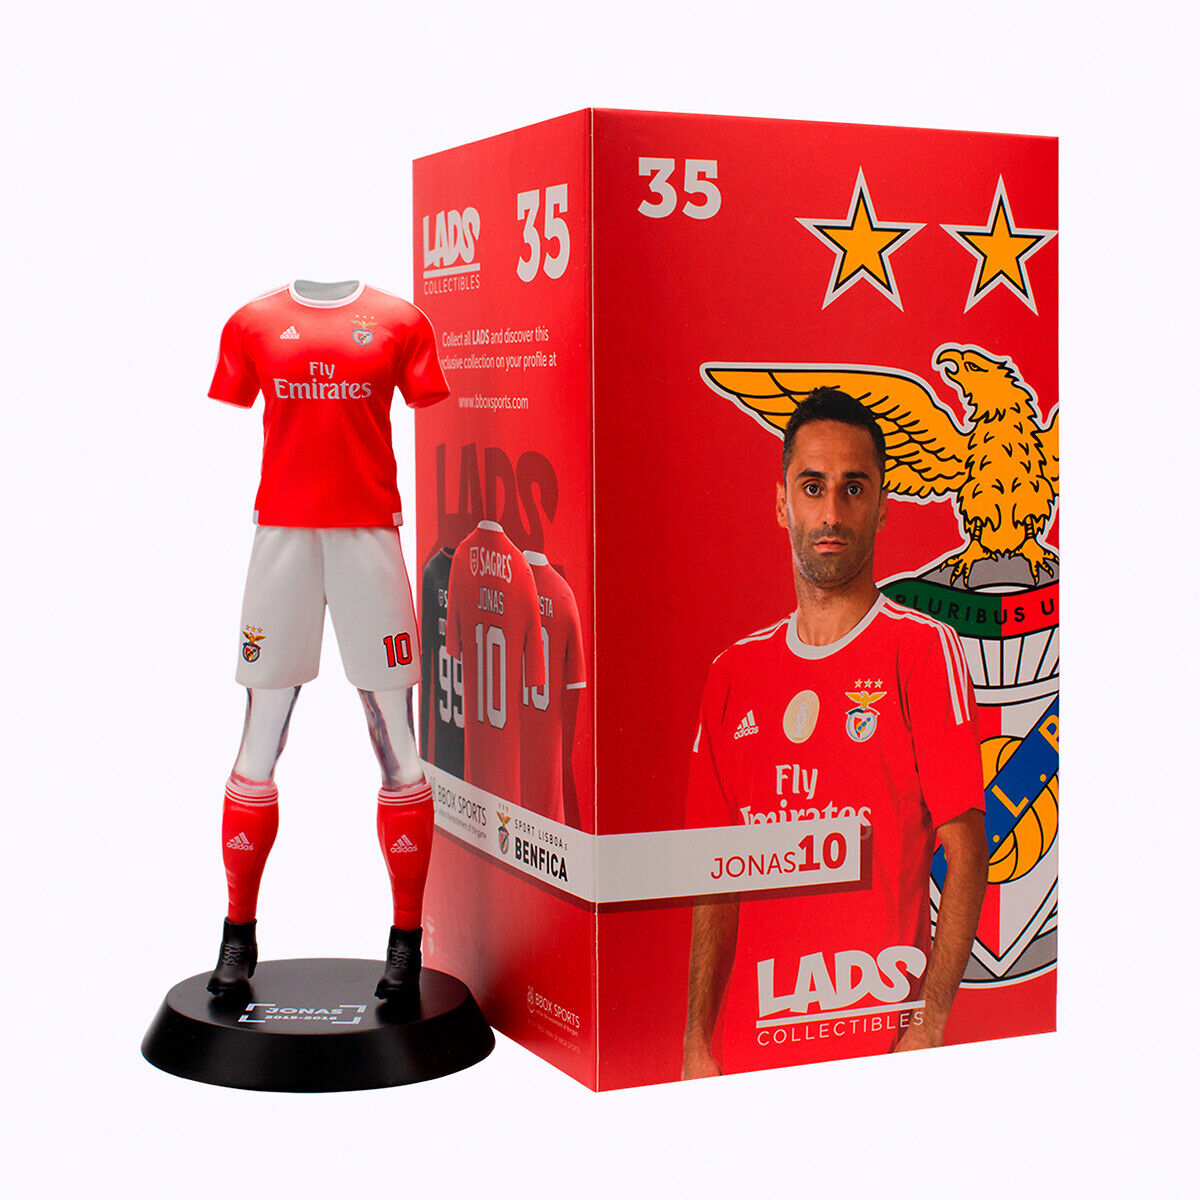 Lads Collectibles Figura Jonas - Benfica 2015/16, da My Lads   vermelho/branco